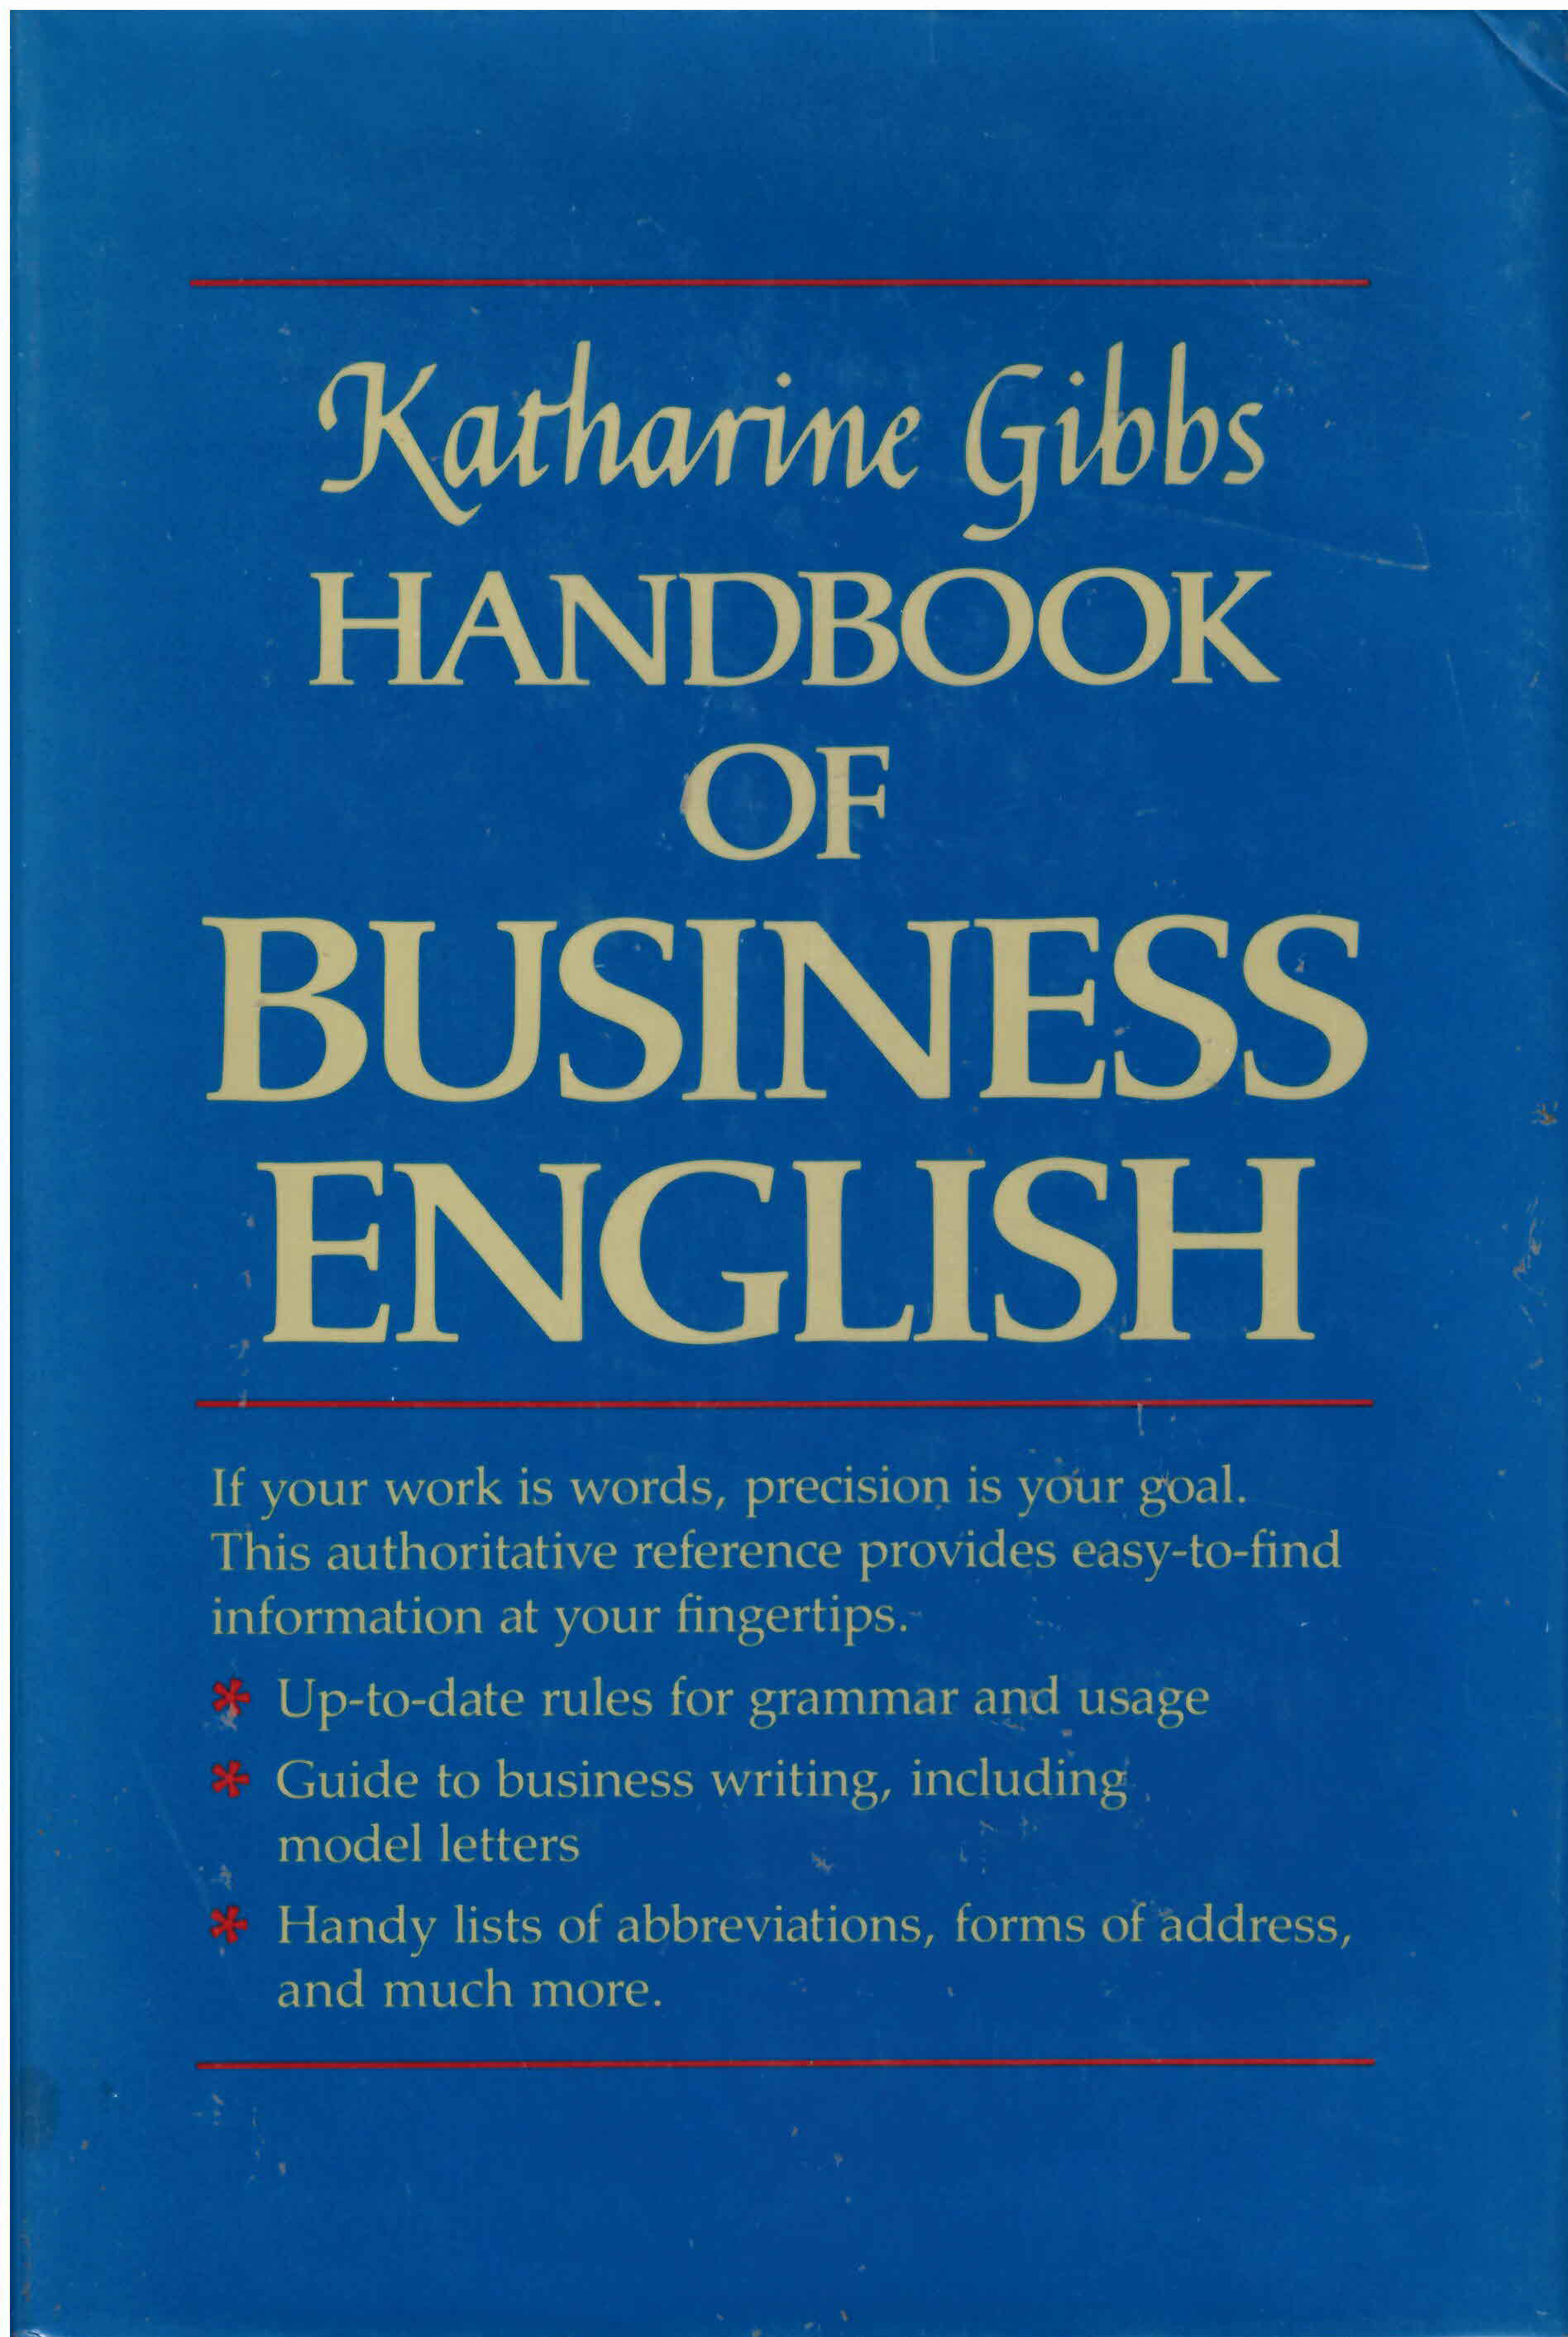 Katharine Gibbs handbook of business English